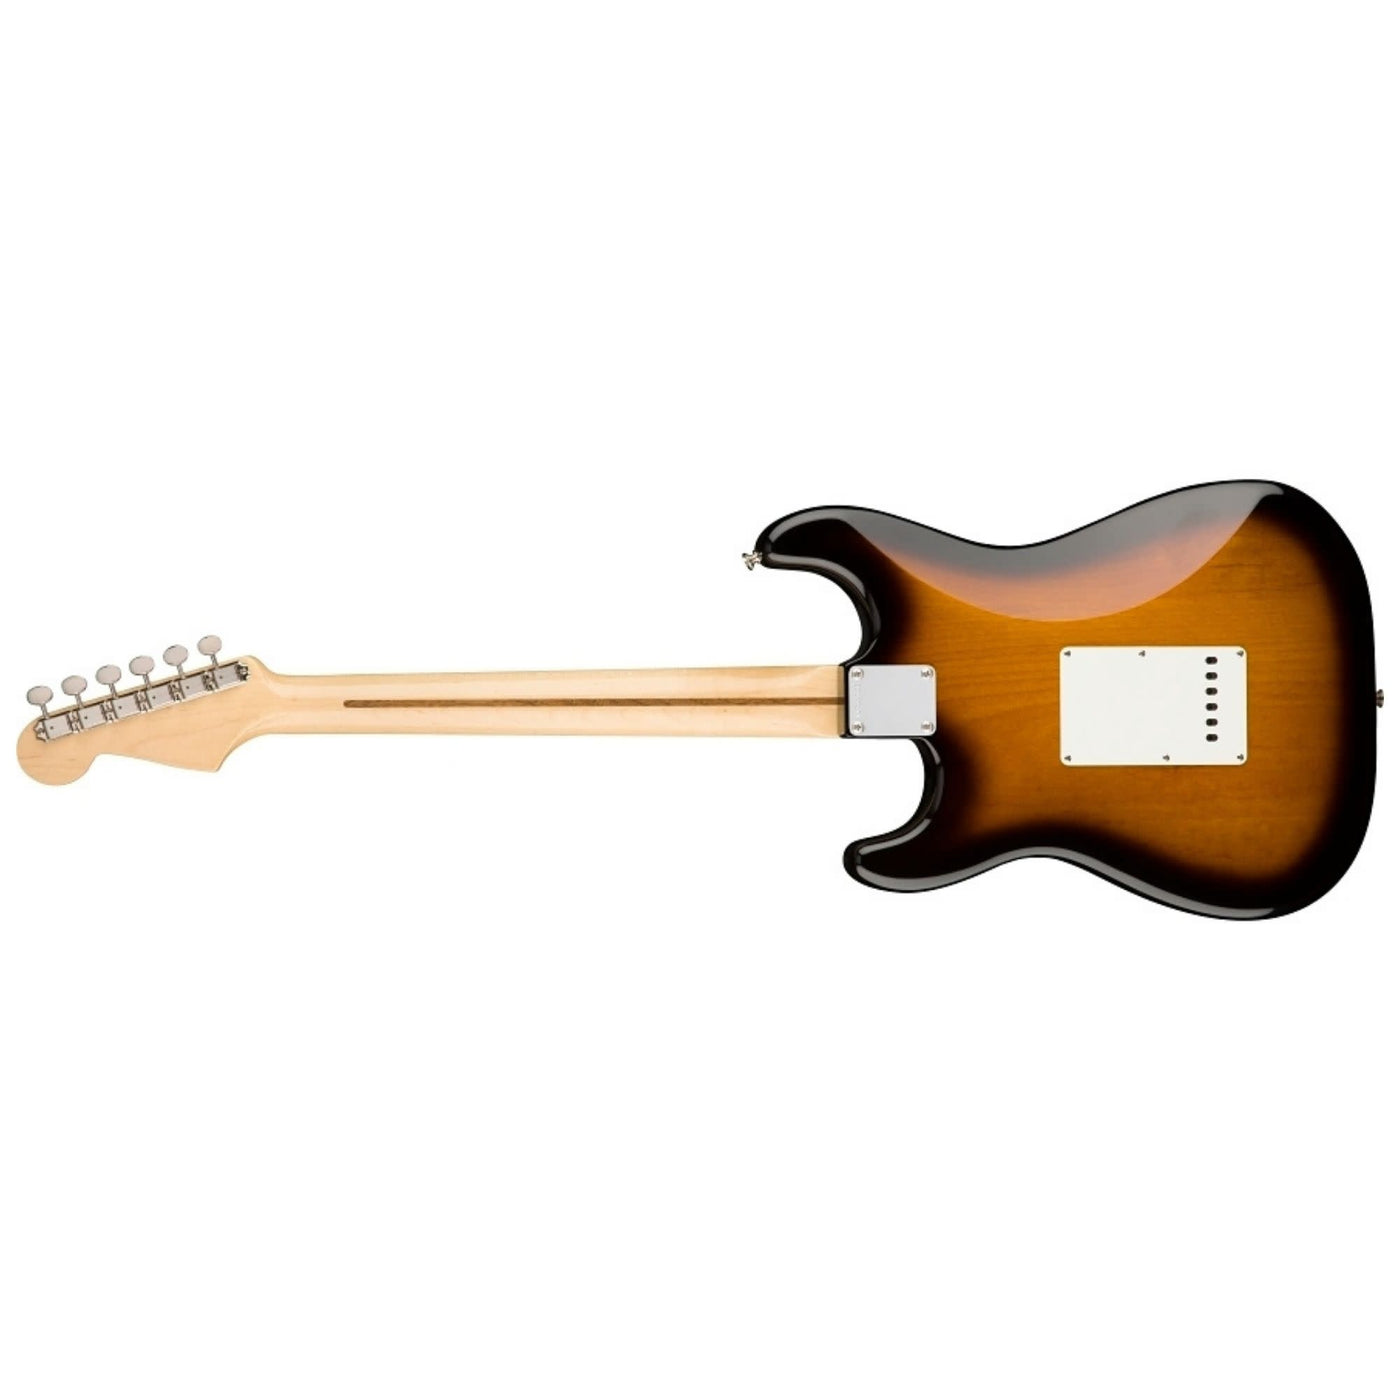 Fender American Original '50s Stratocaster Electric Guitar, 2-Color Sunburst